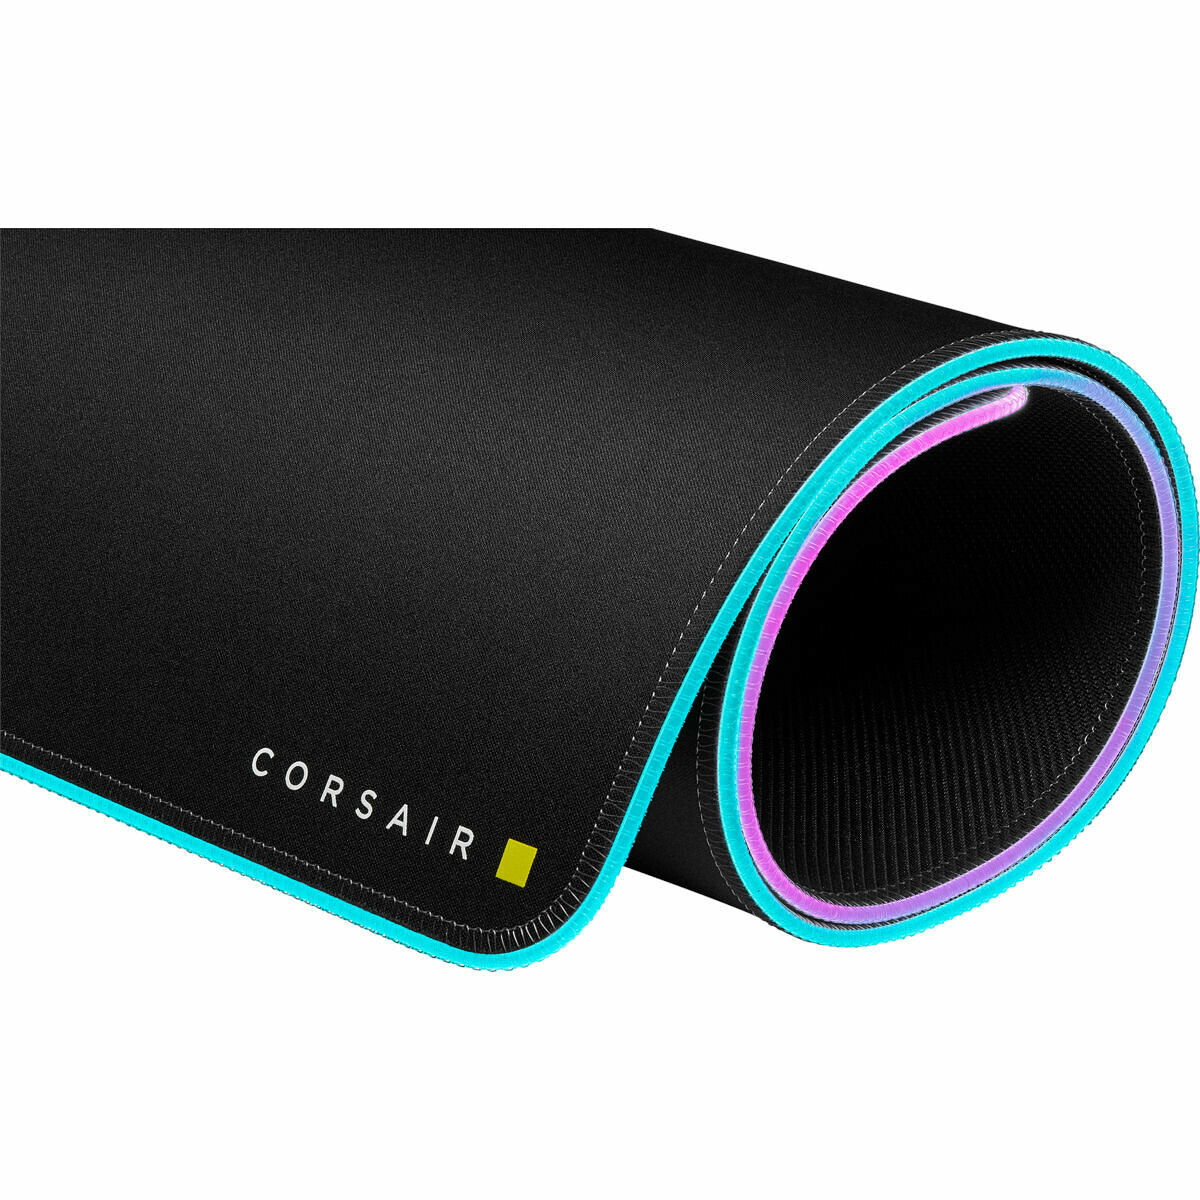 Corsair MM700 RGB Extended - Tapis de souris Gamer - Top Achat